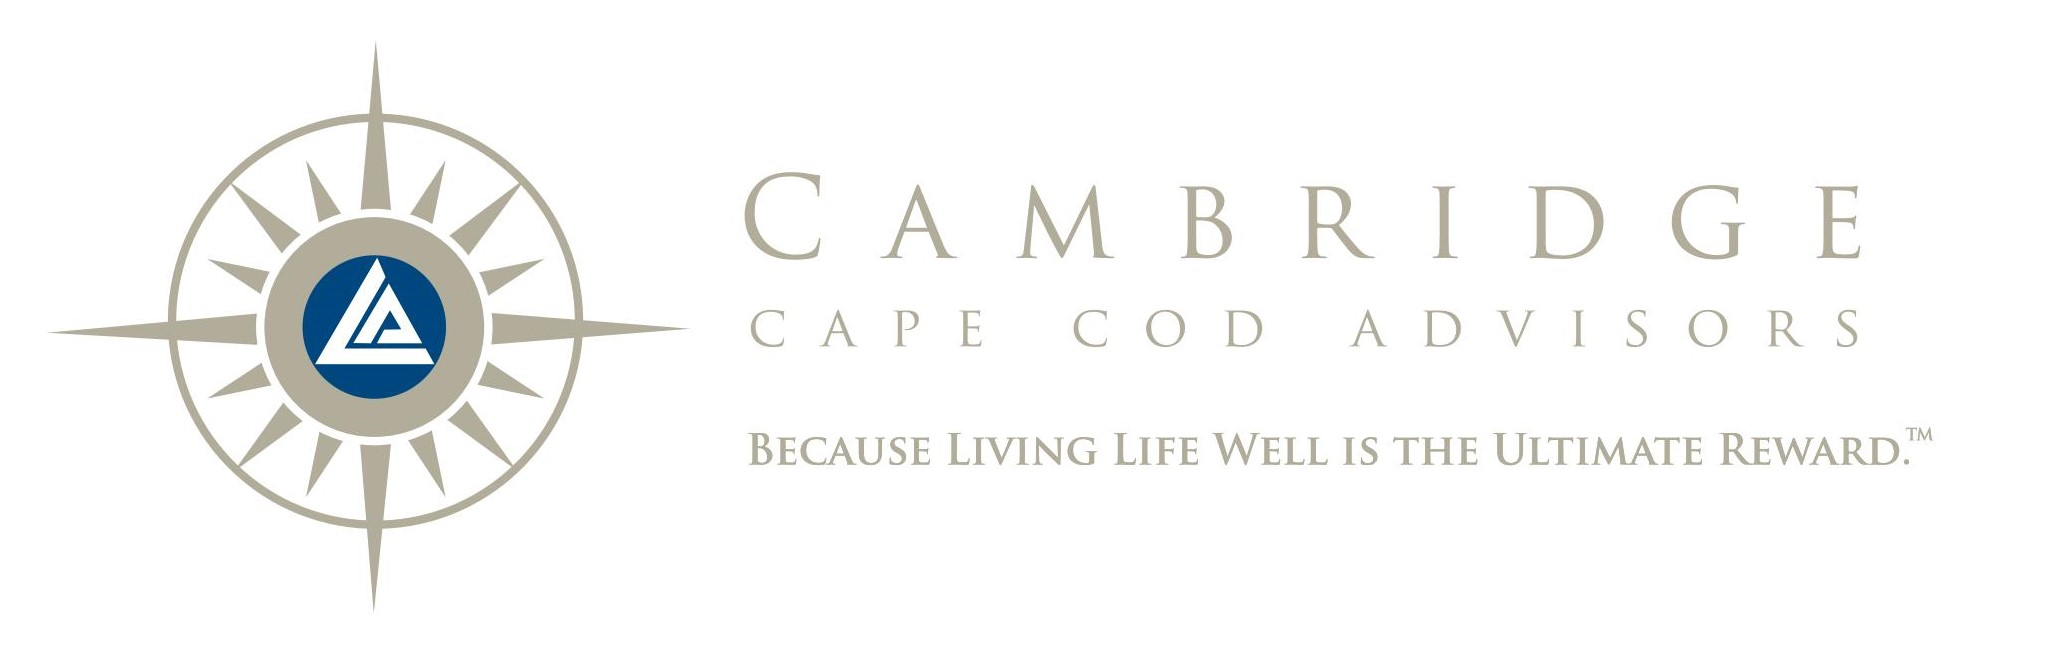 Cambridge Cape Cod Advisors